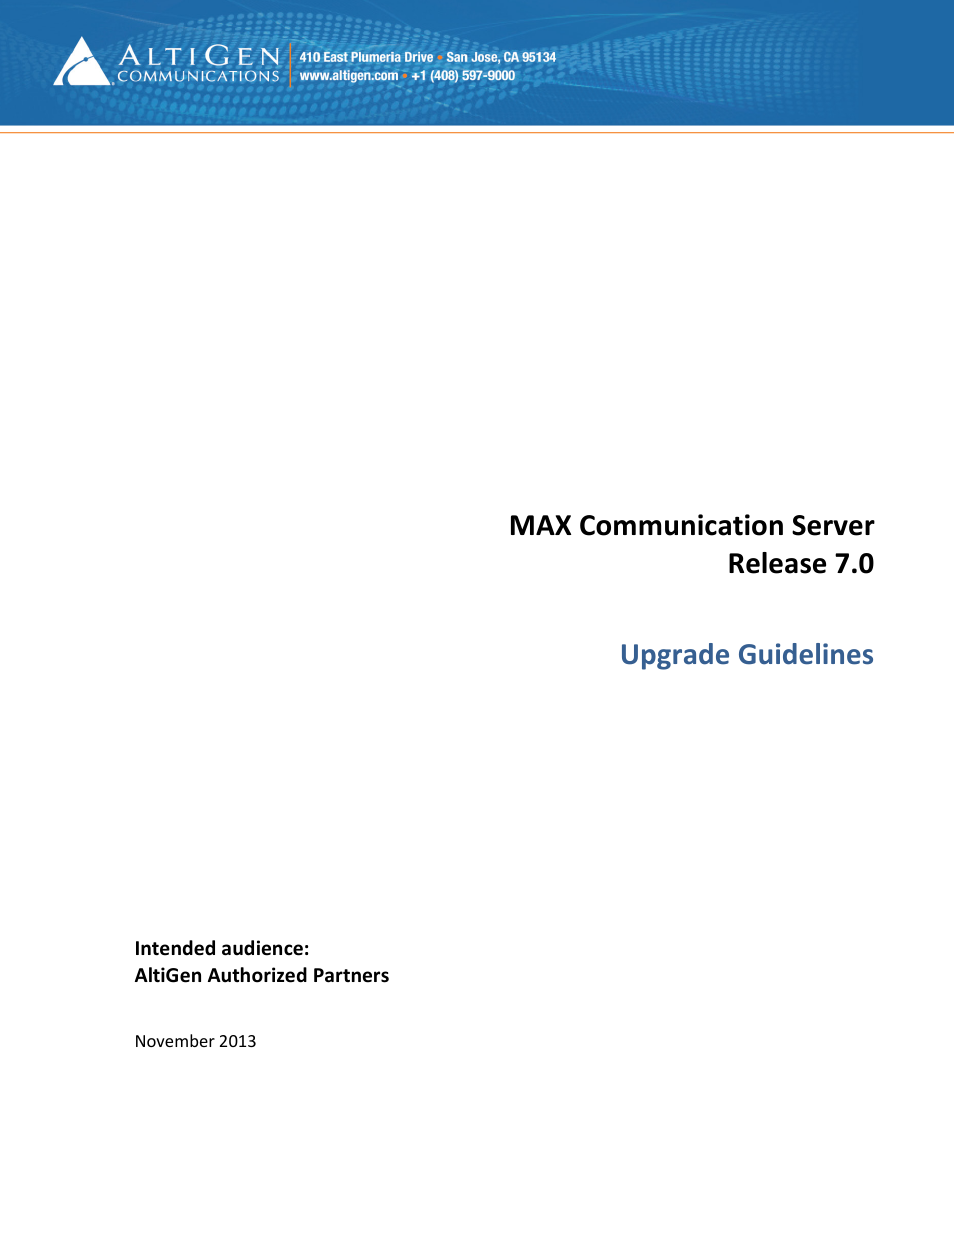 MAXCS 7.0 MaxCS 7.0 Upgrade Guidelines